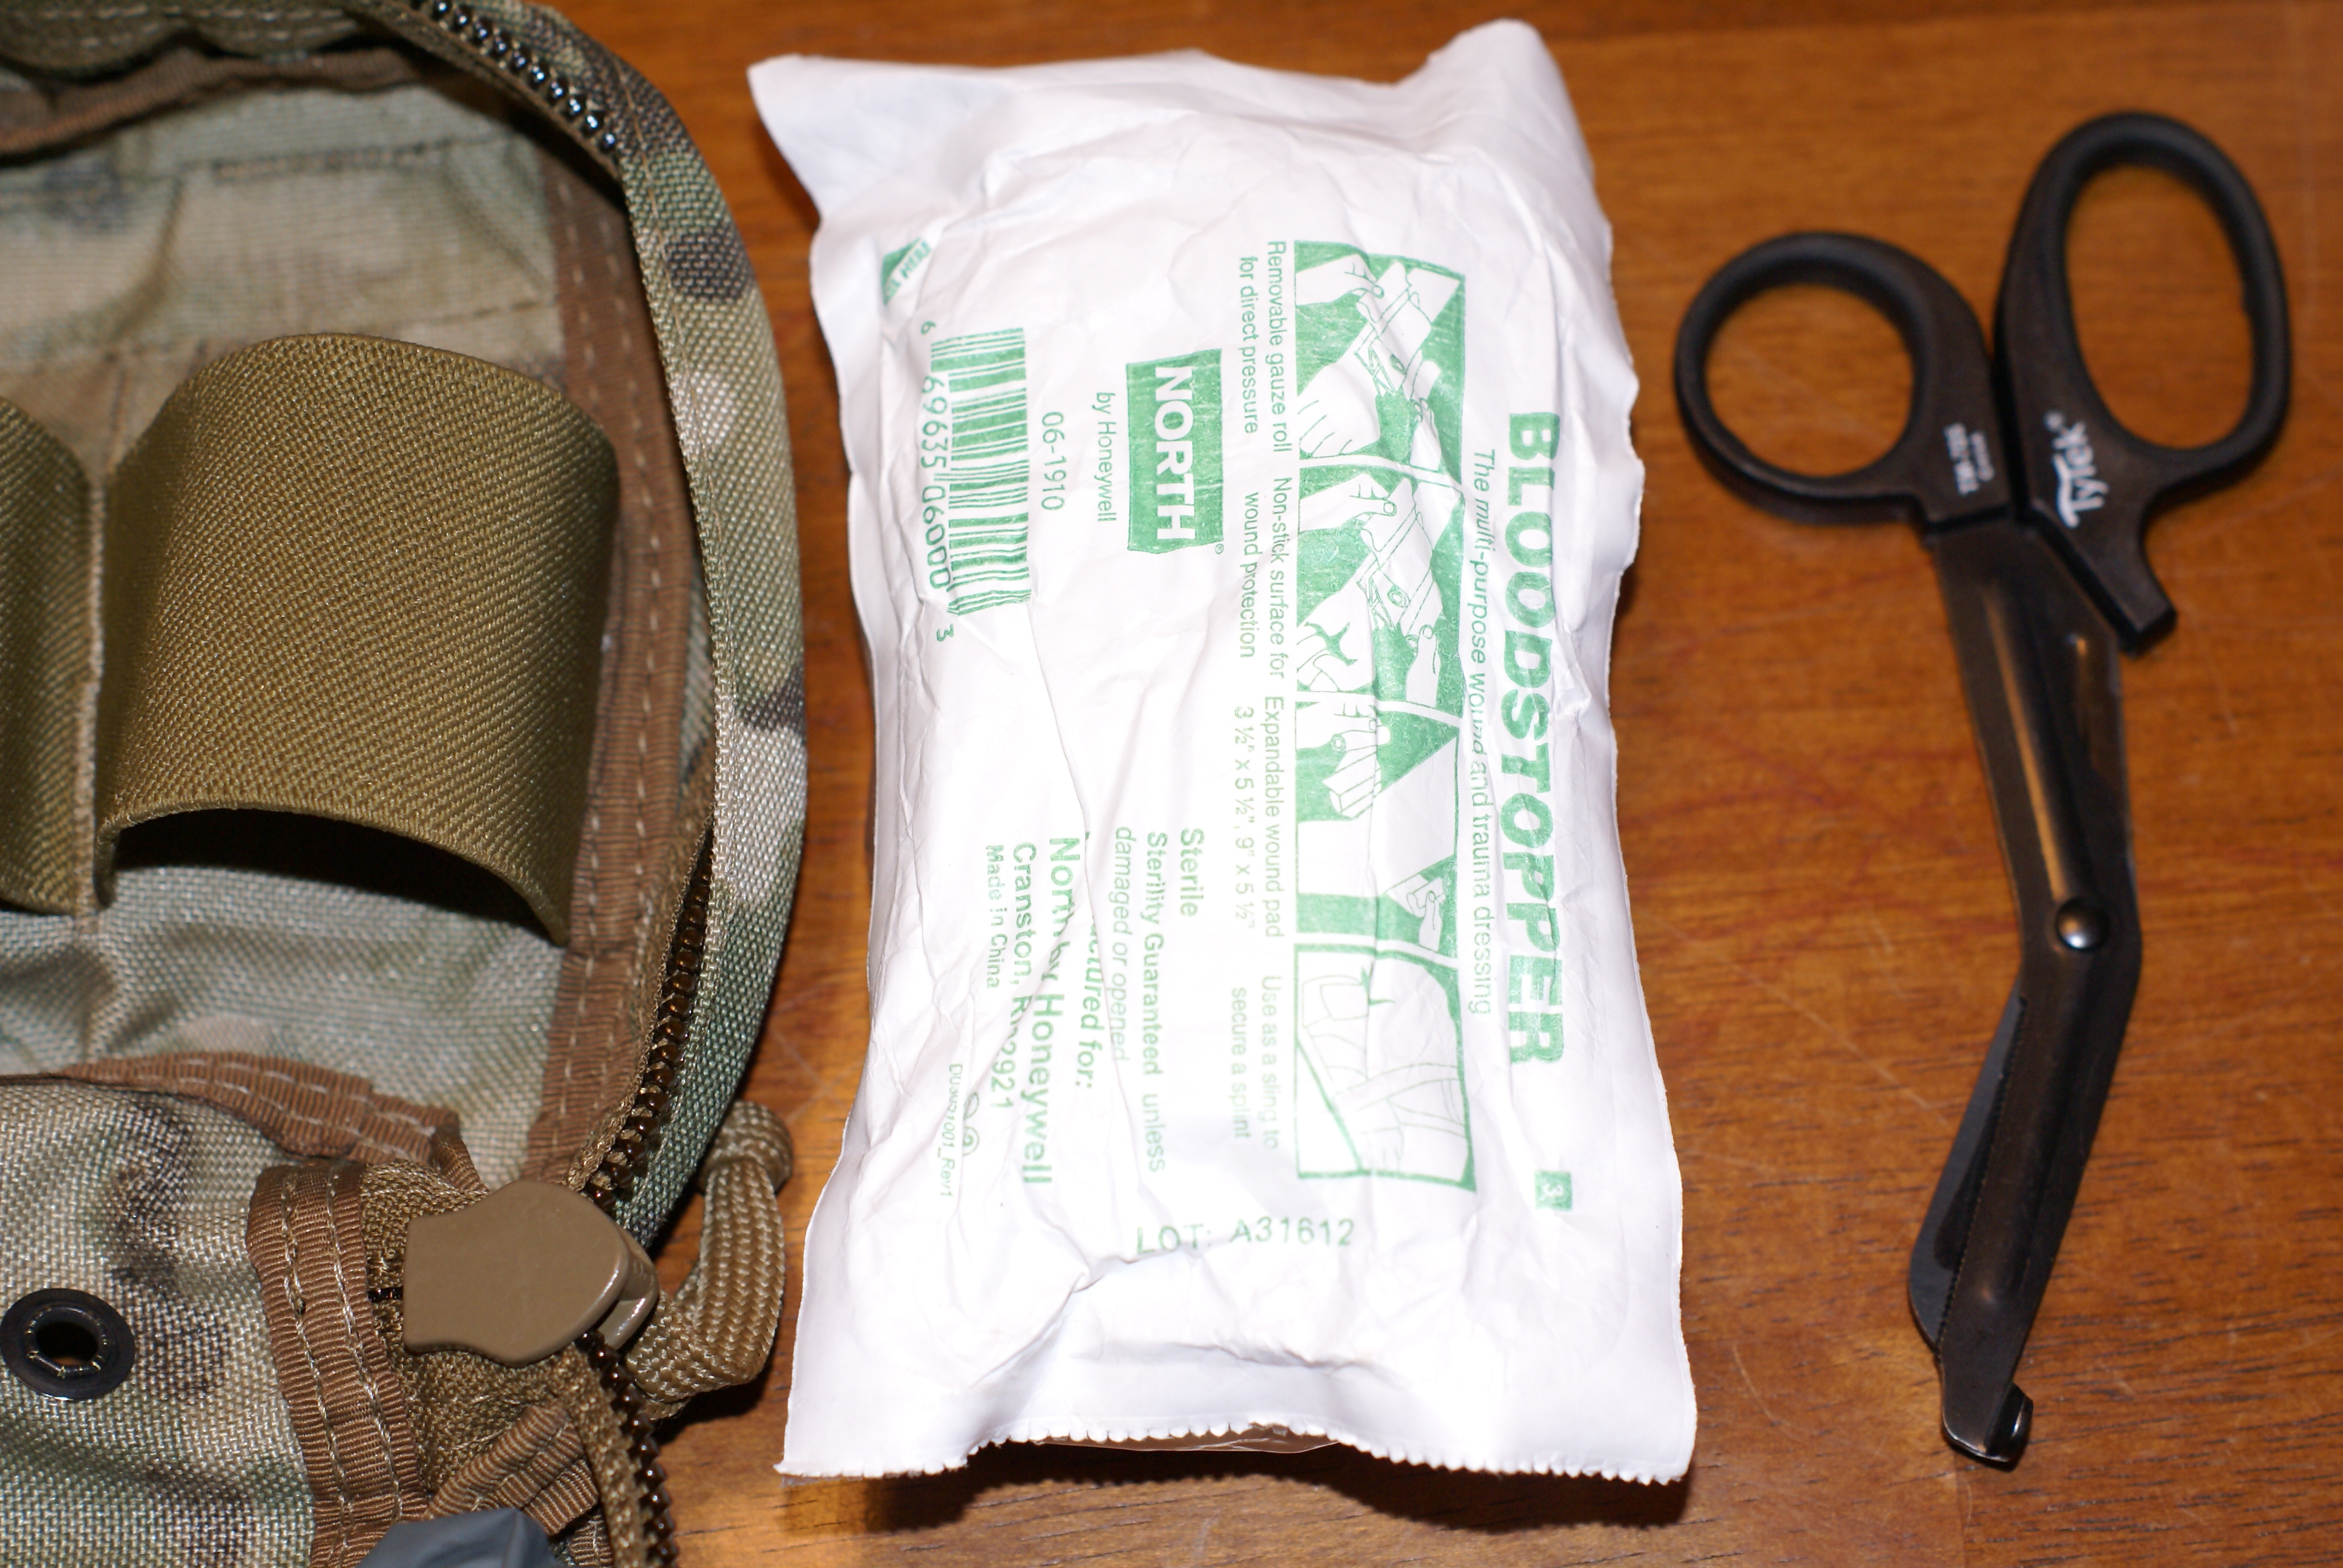 Traveler Kit by Chinook Medical Gear